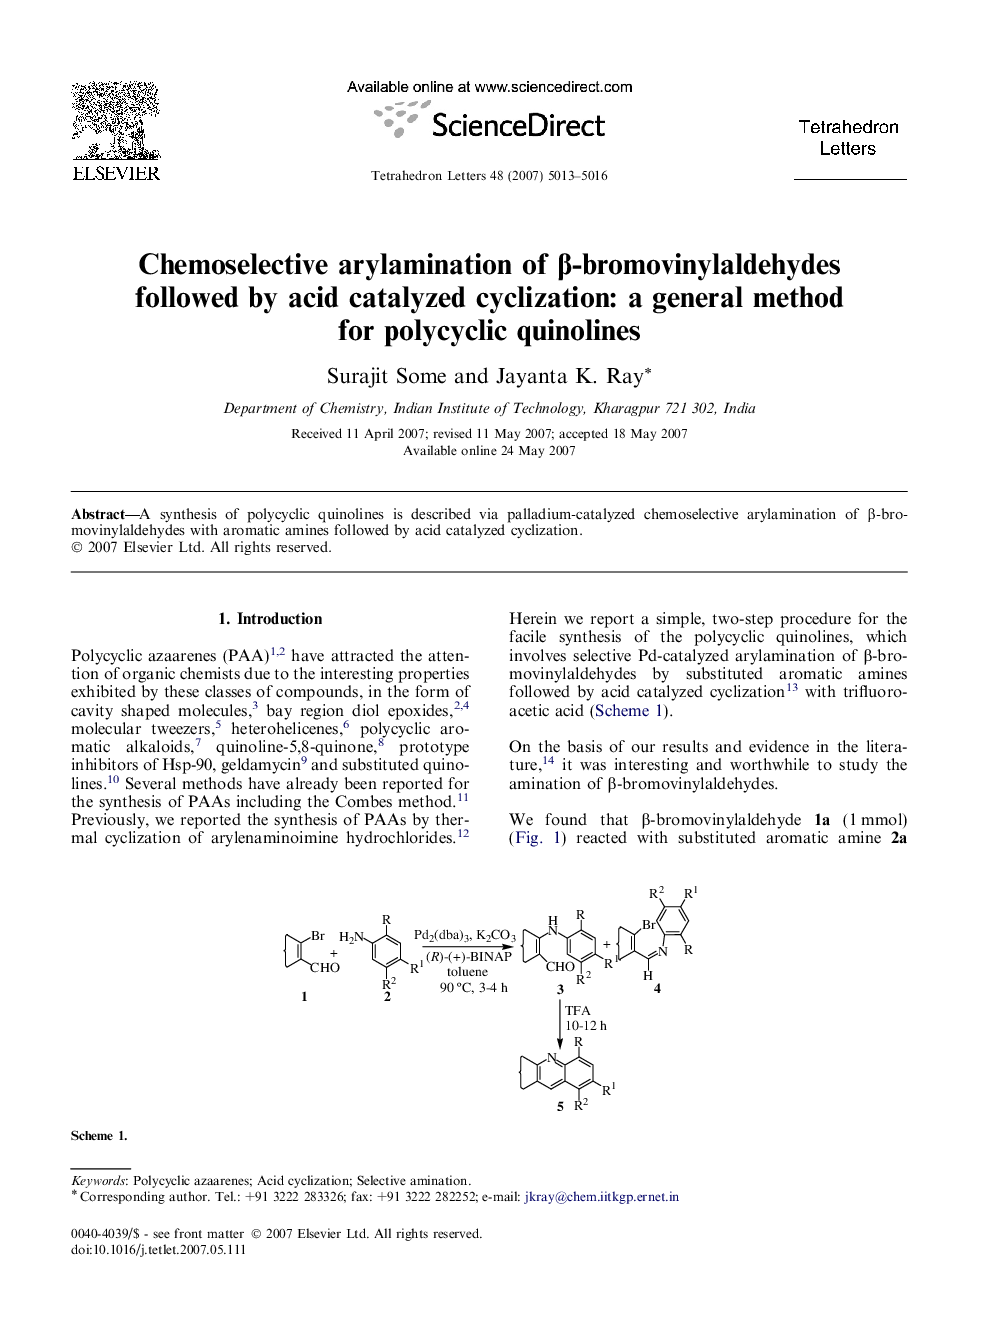 Chemoselective arylamination of Î²-bromovinylaldehydes followed by acid catalyzed cyclization: a general method for polycyclic quinolines